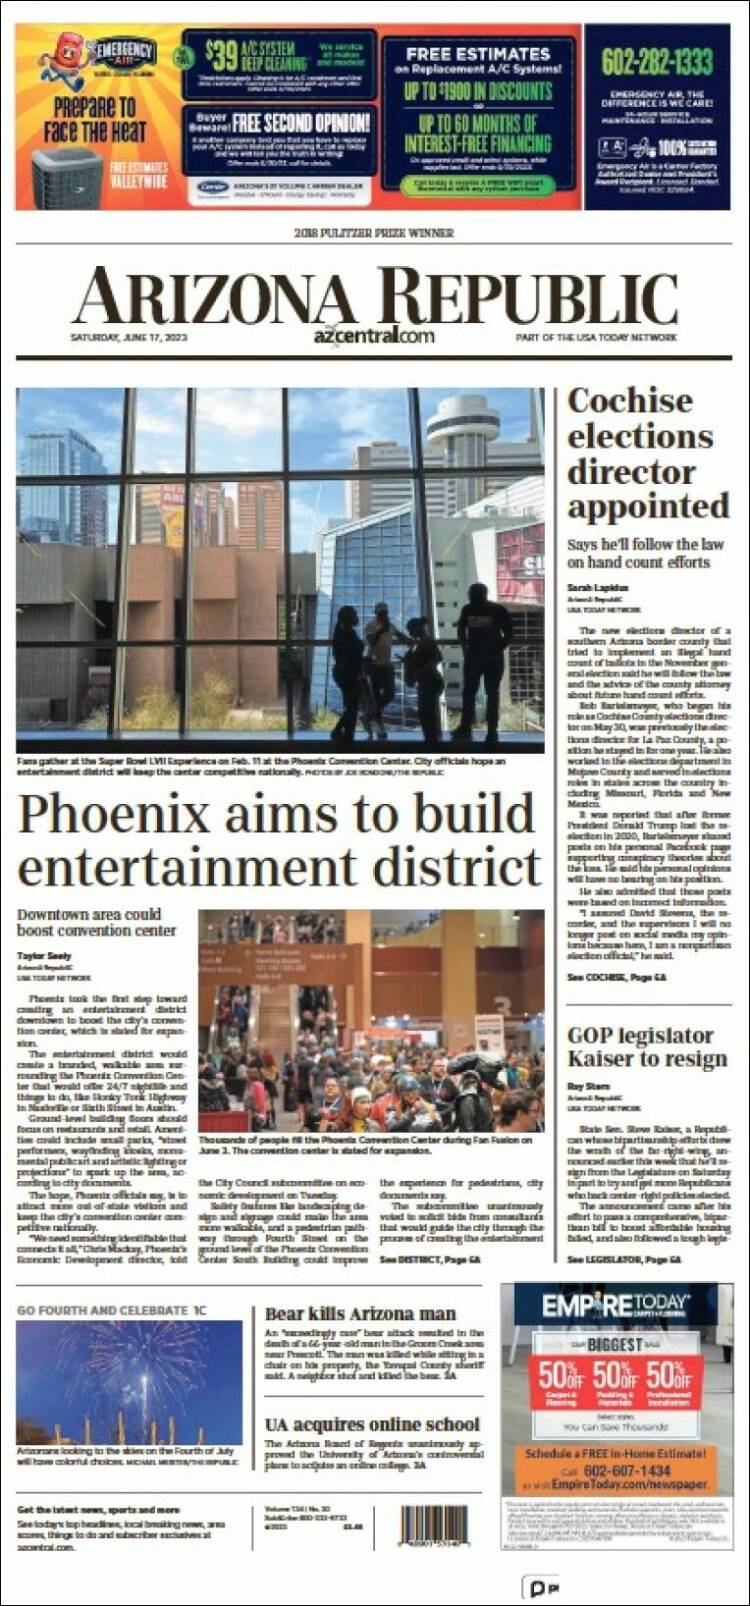 Portada de Arizona Republic News (USA)